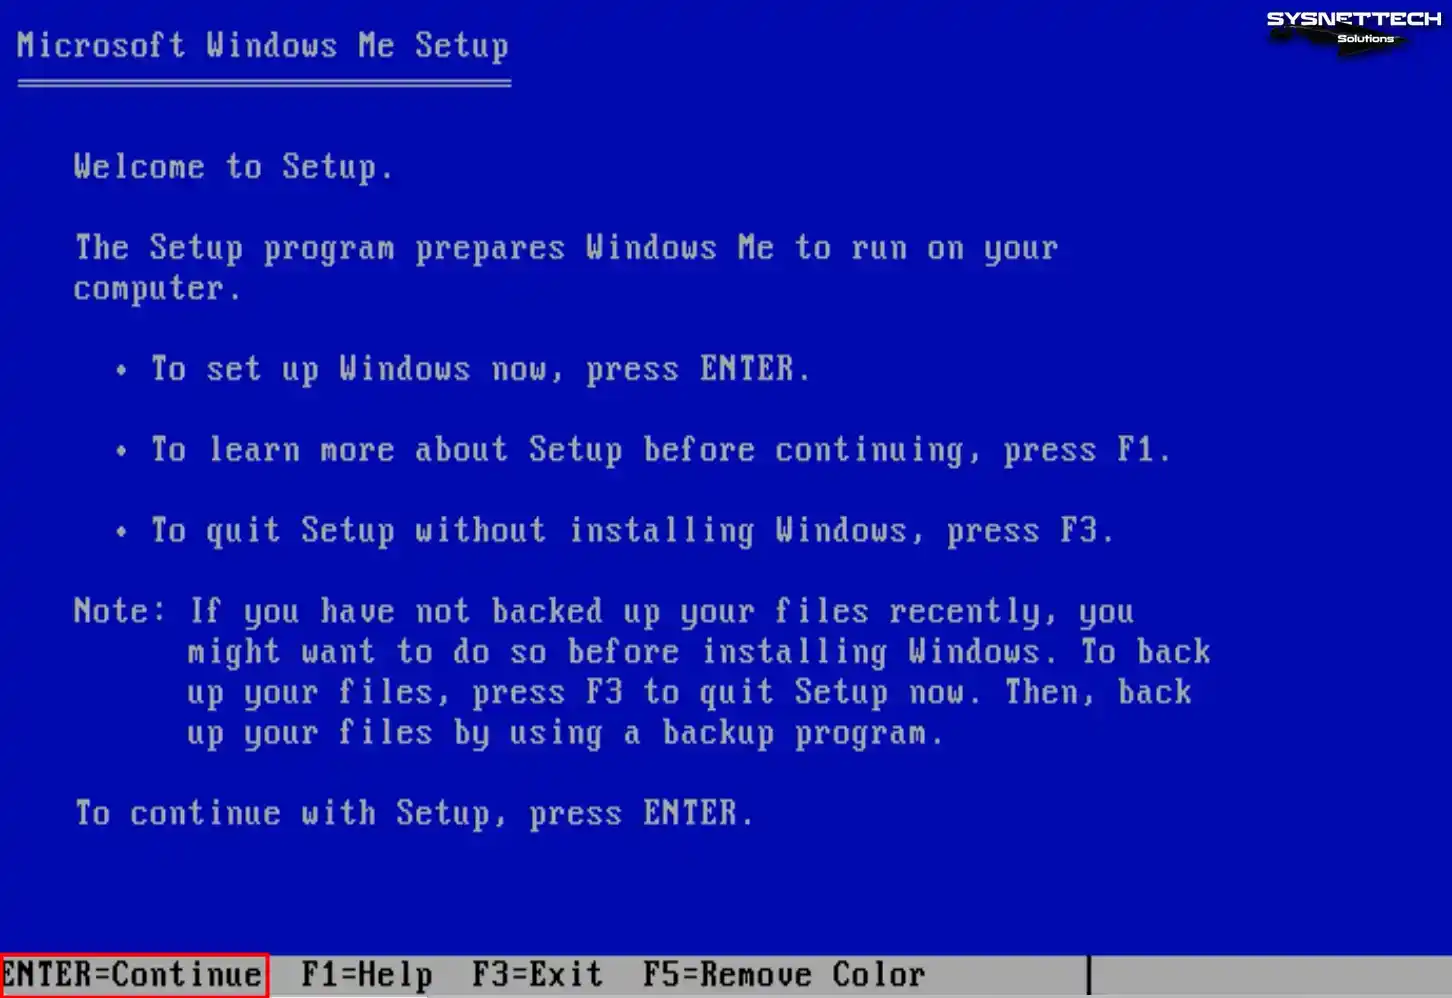 Microsoft Windows Me Setup